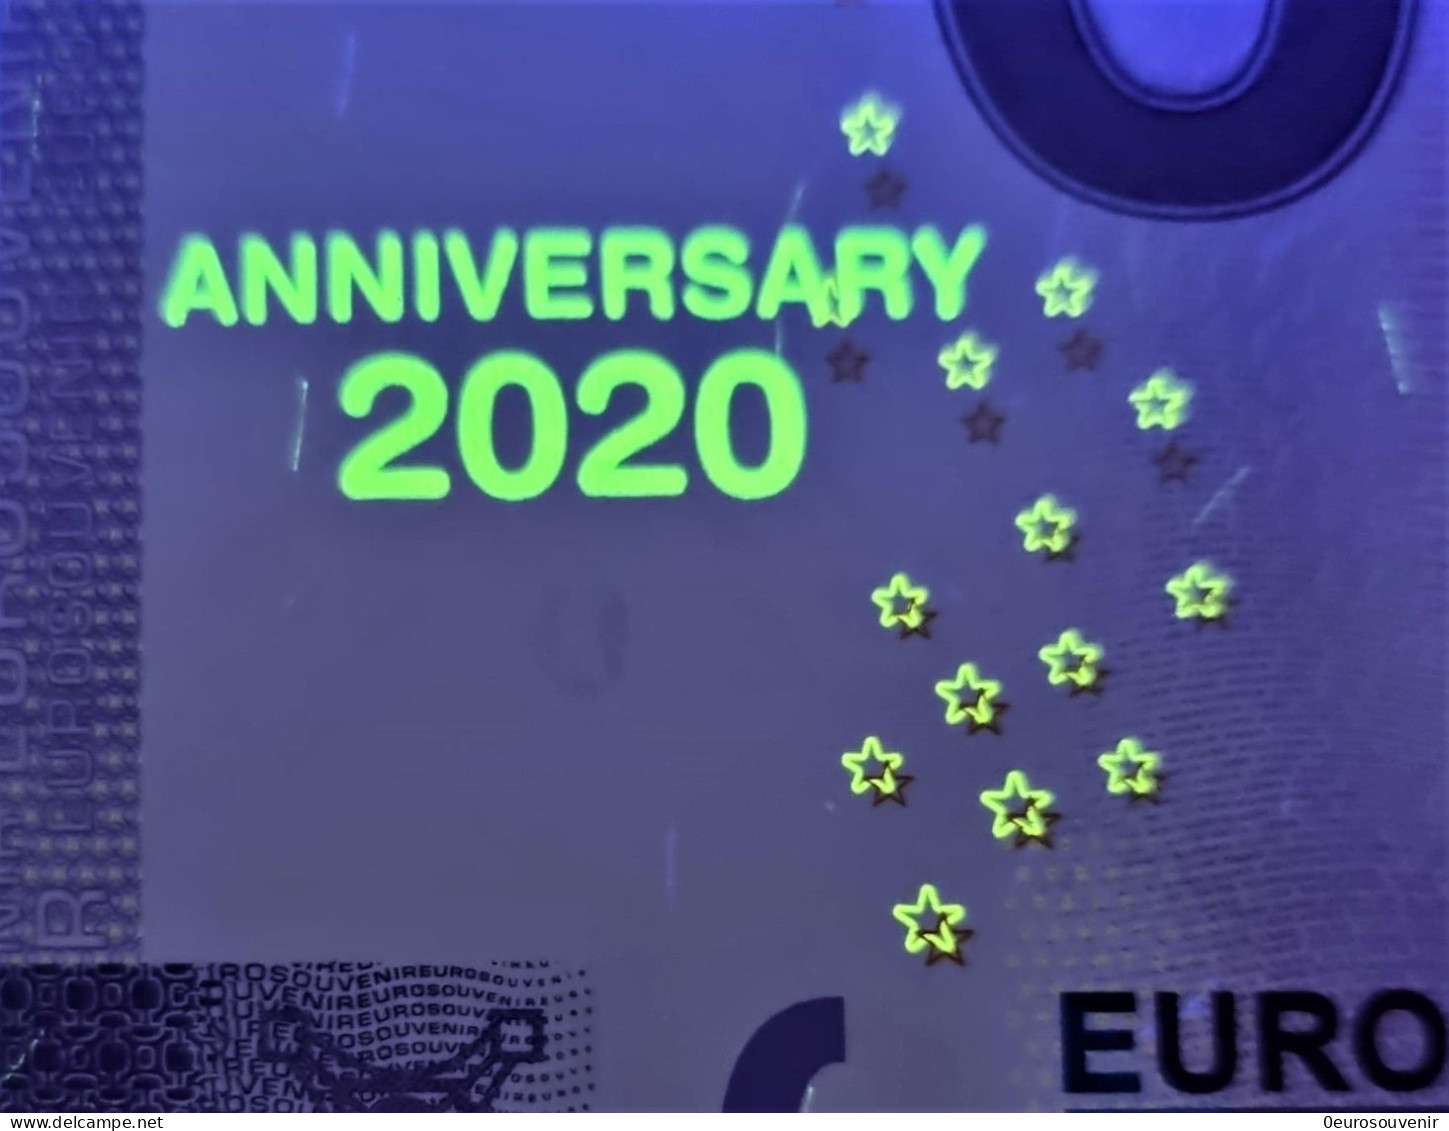 0-Euro XEBM 2020-3 TECHNIK MUSEUM SPEYER - ANTONOV 22  Set NORMAL+ANNIVERSARY - Private Proofs / Unofficial